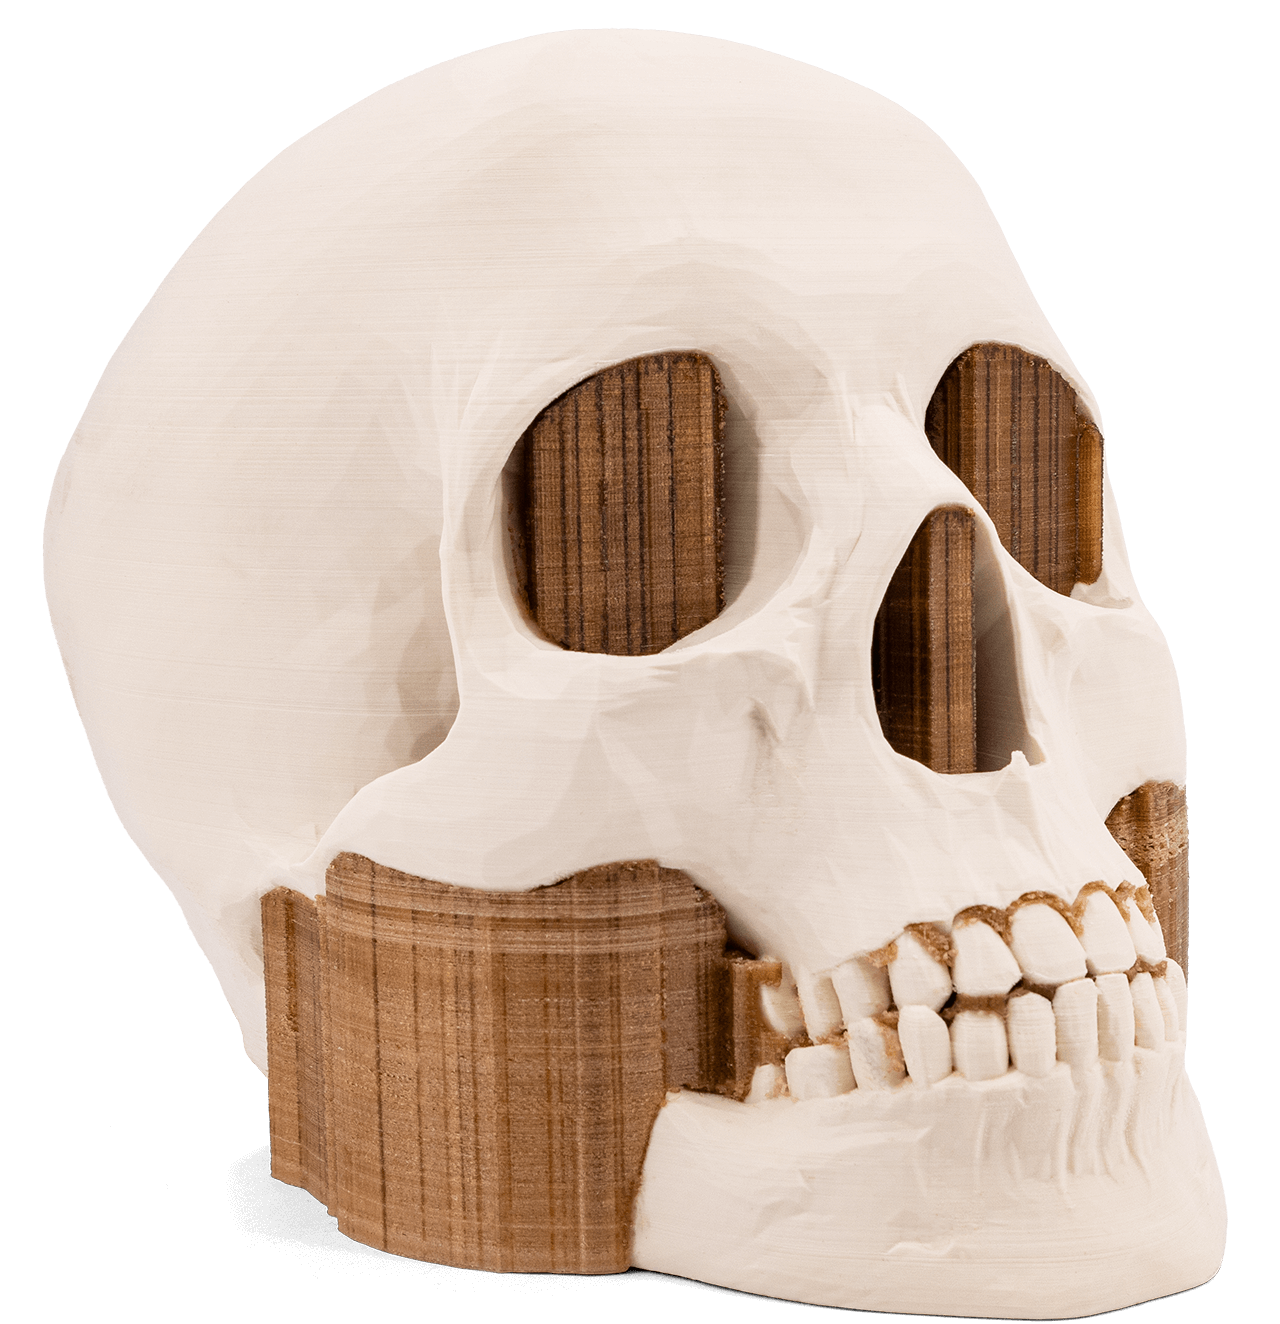 Skull made with Simubone